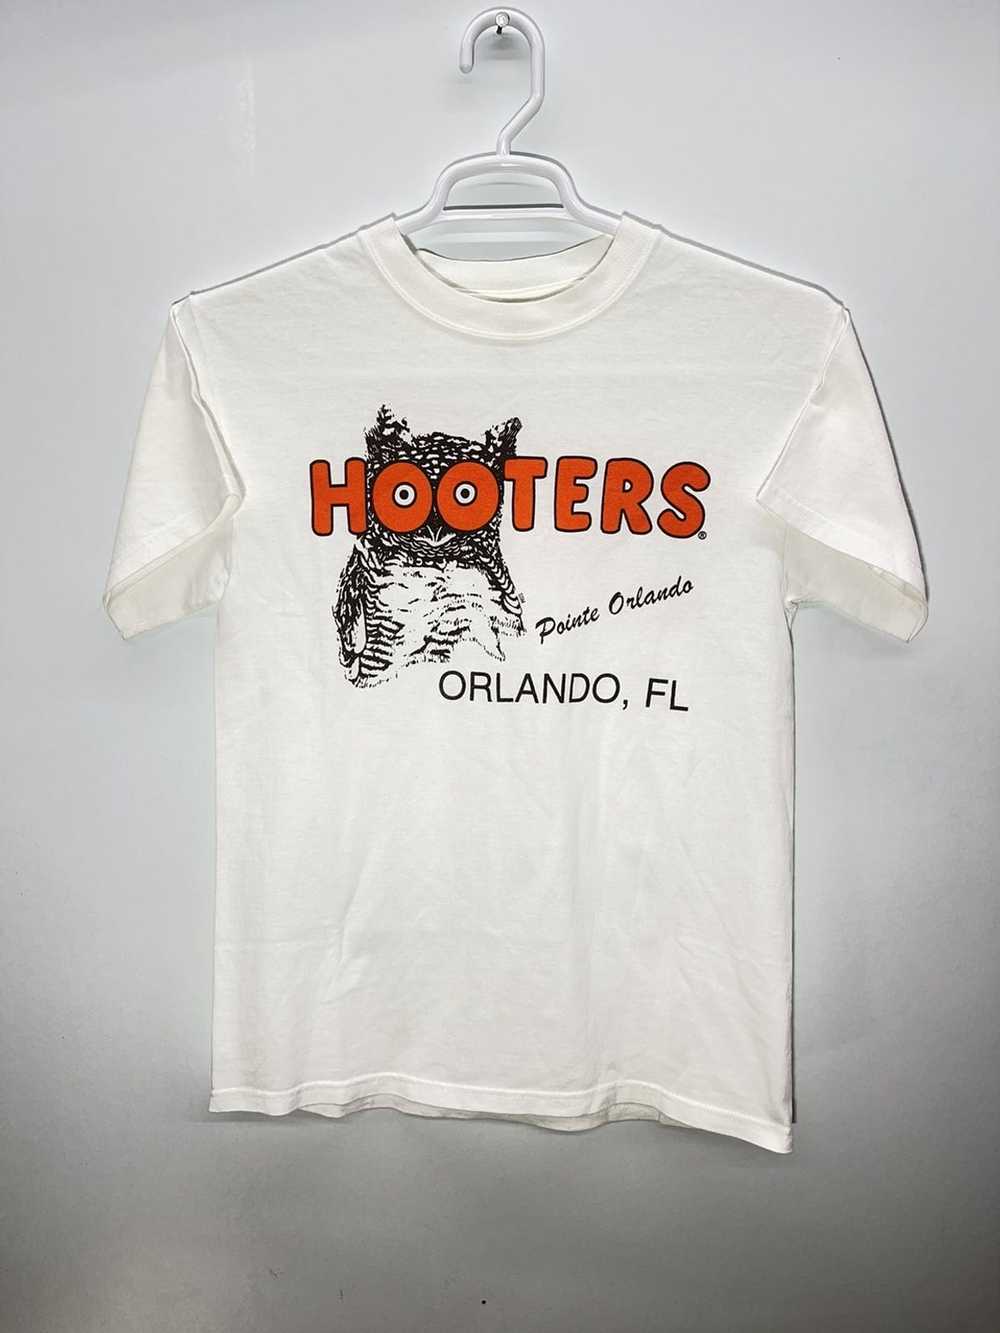 Vintage VTG hOOters graphic shirt Orlando Florida - image 1